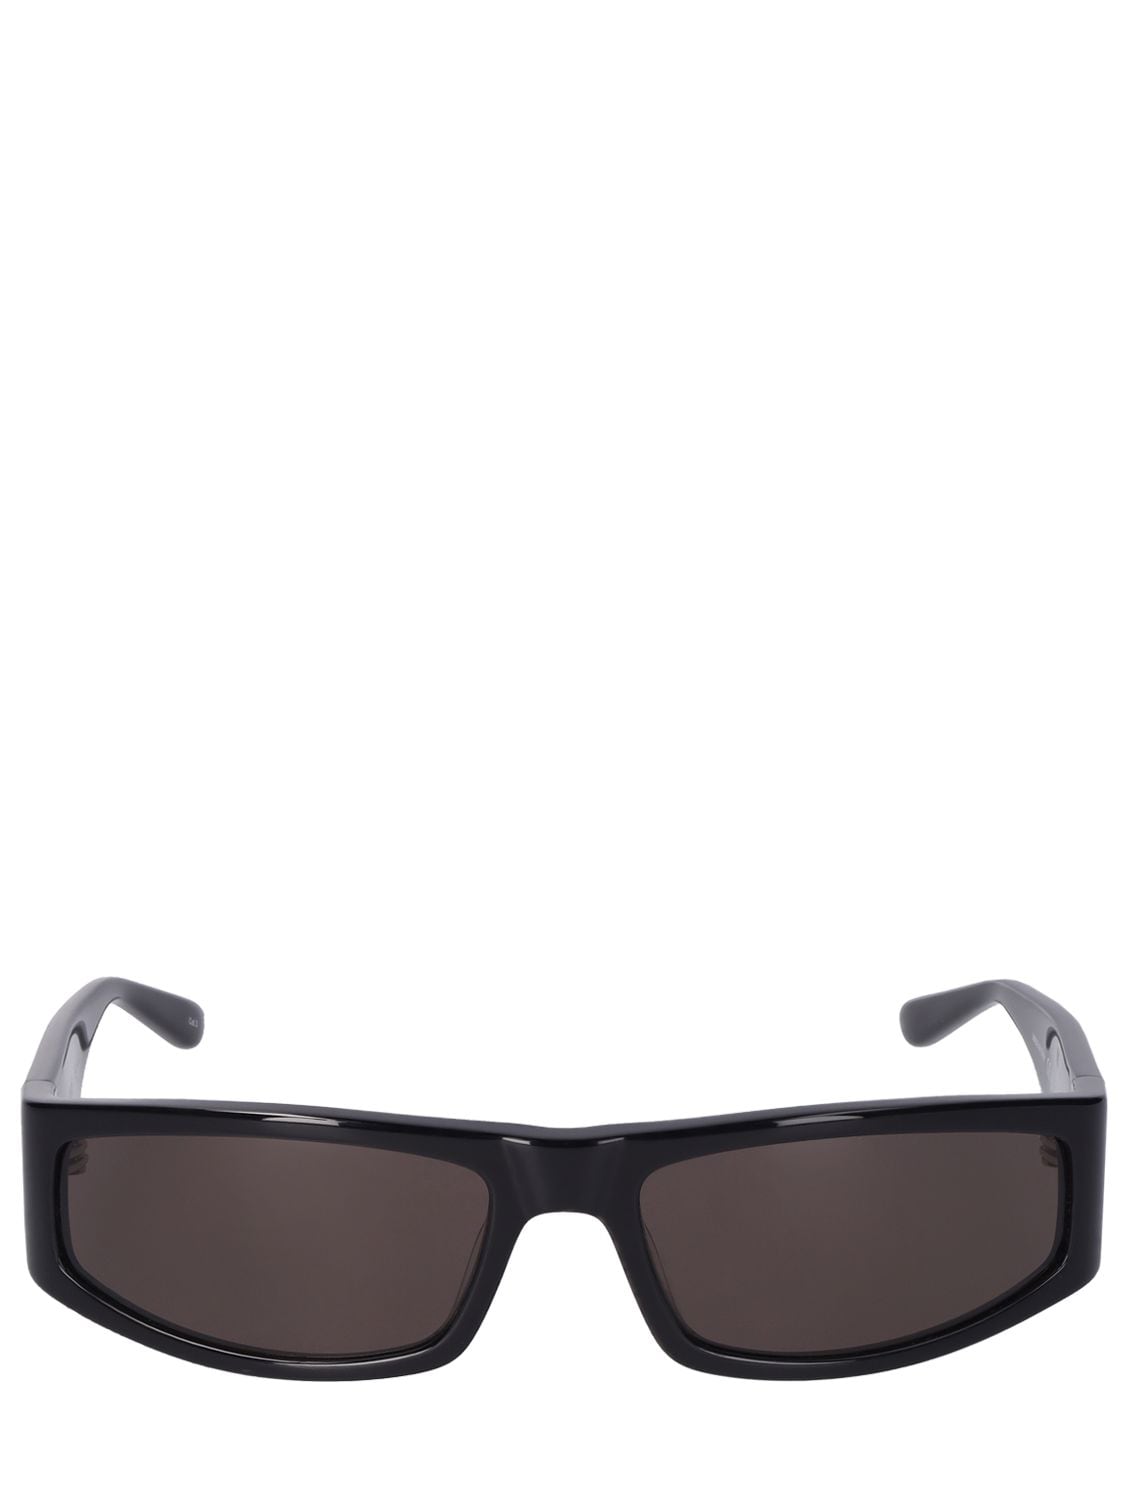 Courrèges Techno Squared Acetate Sunglasses In Black